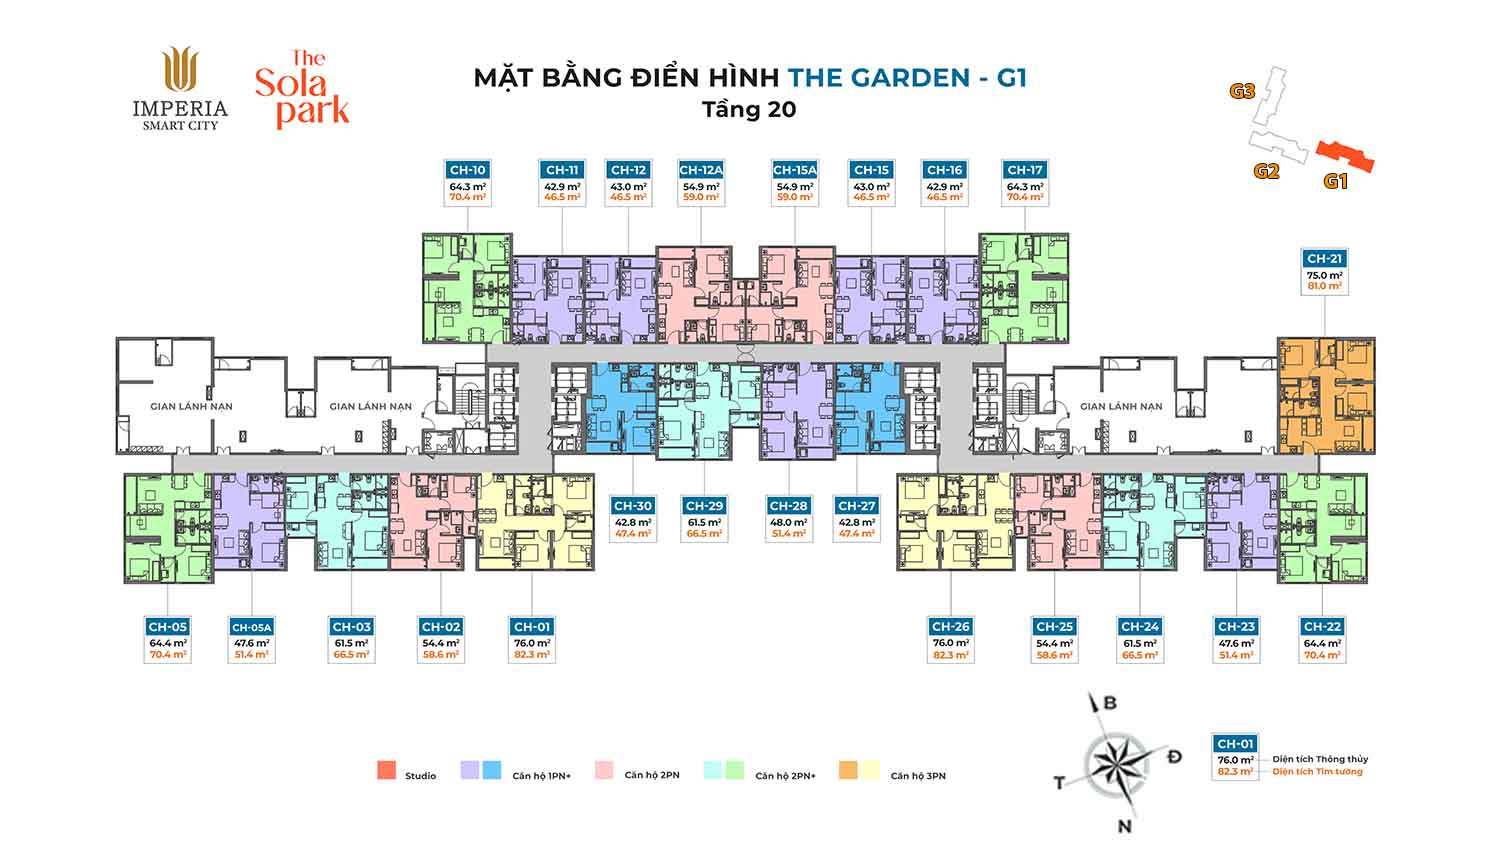 G1-the-Garden-mat-bang-tang-dien-hinh-tang-20-Imperia-Smart-City-2-The-Sola-Park-W1500